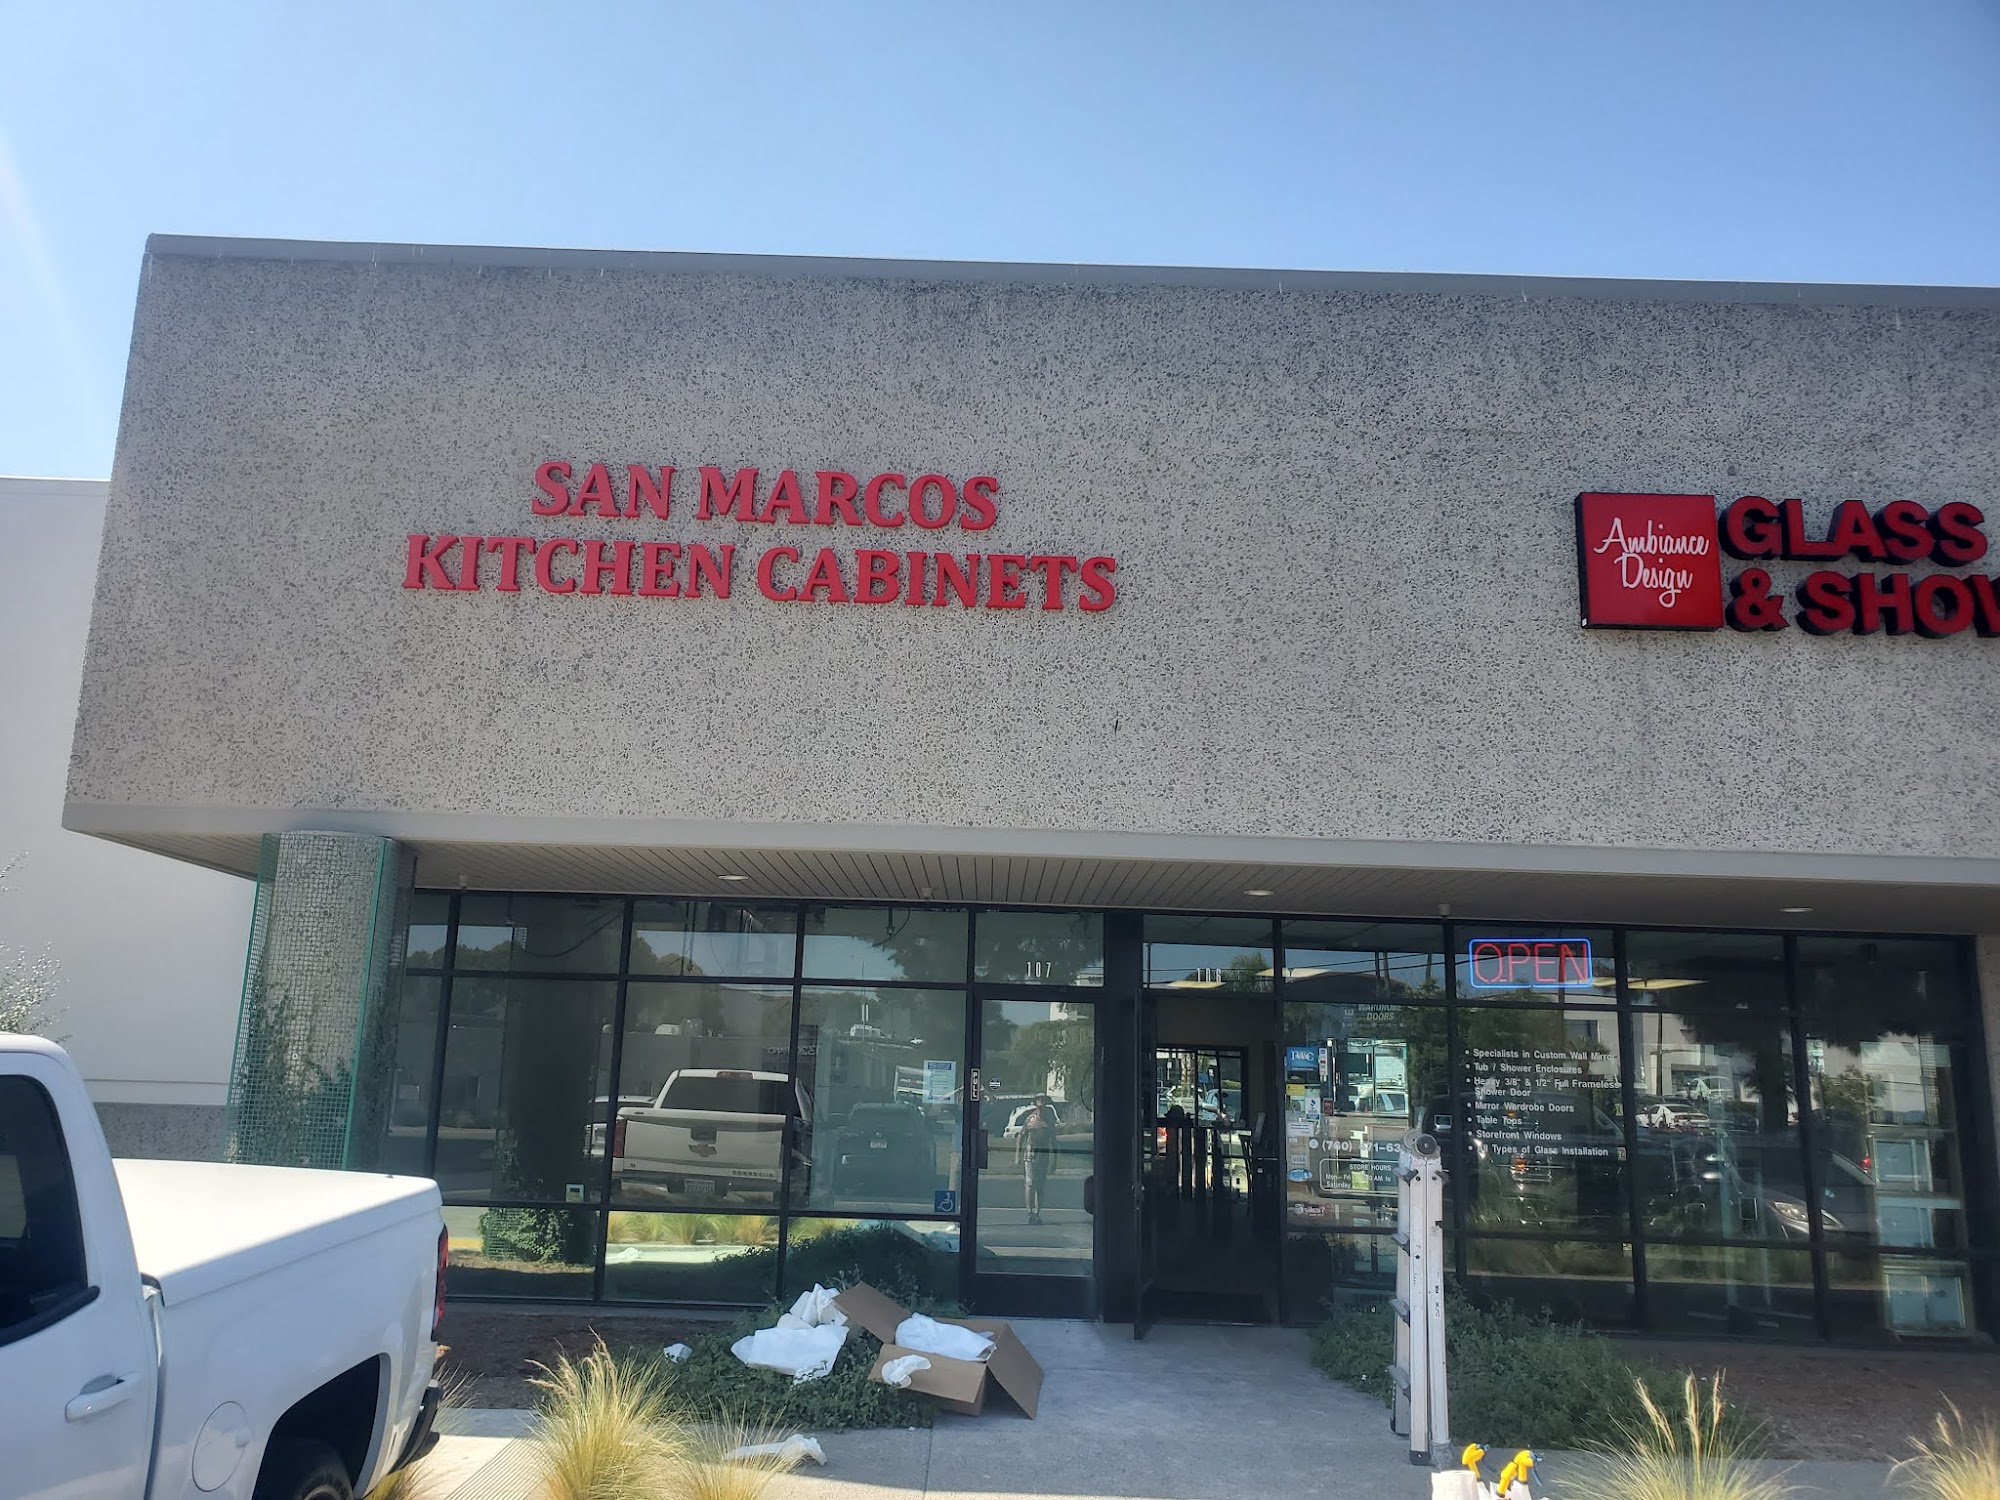 Signarama San Marcos/Vista, CA